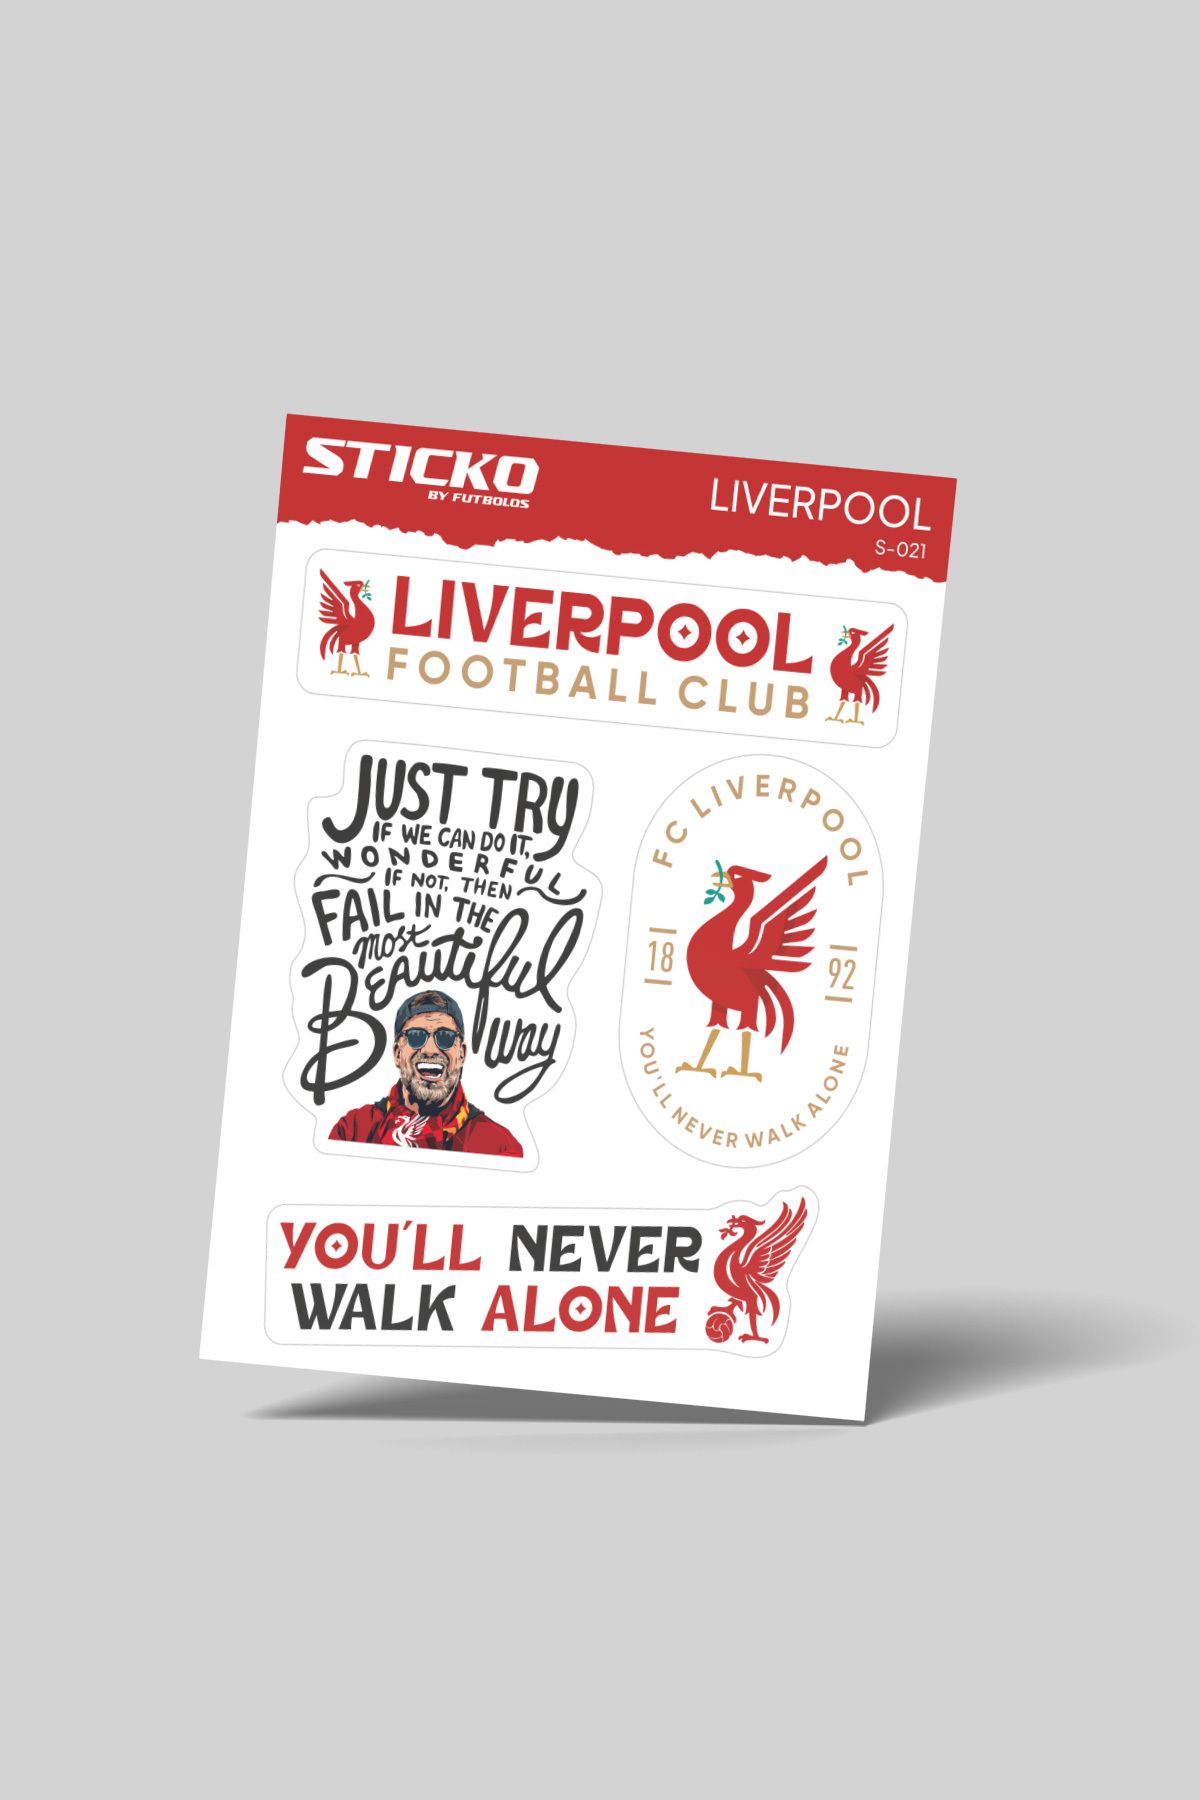 Futbolos Liverpool Sticker - Liverpool Footbal Club, Jürgen Klopp Etiket